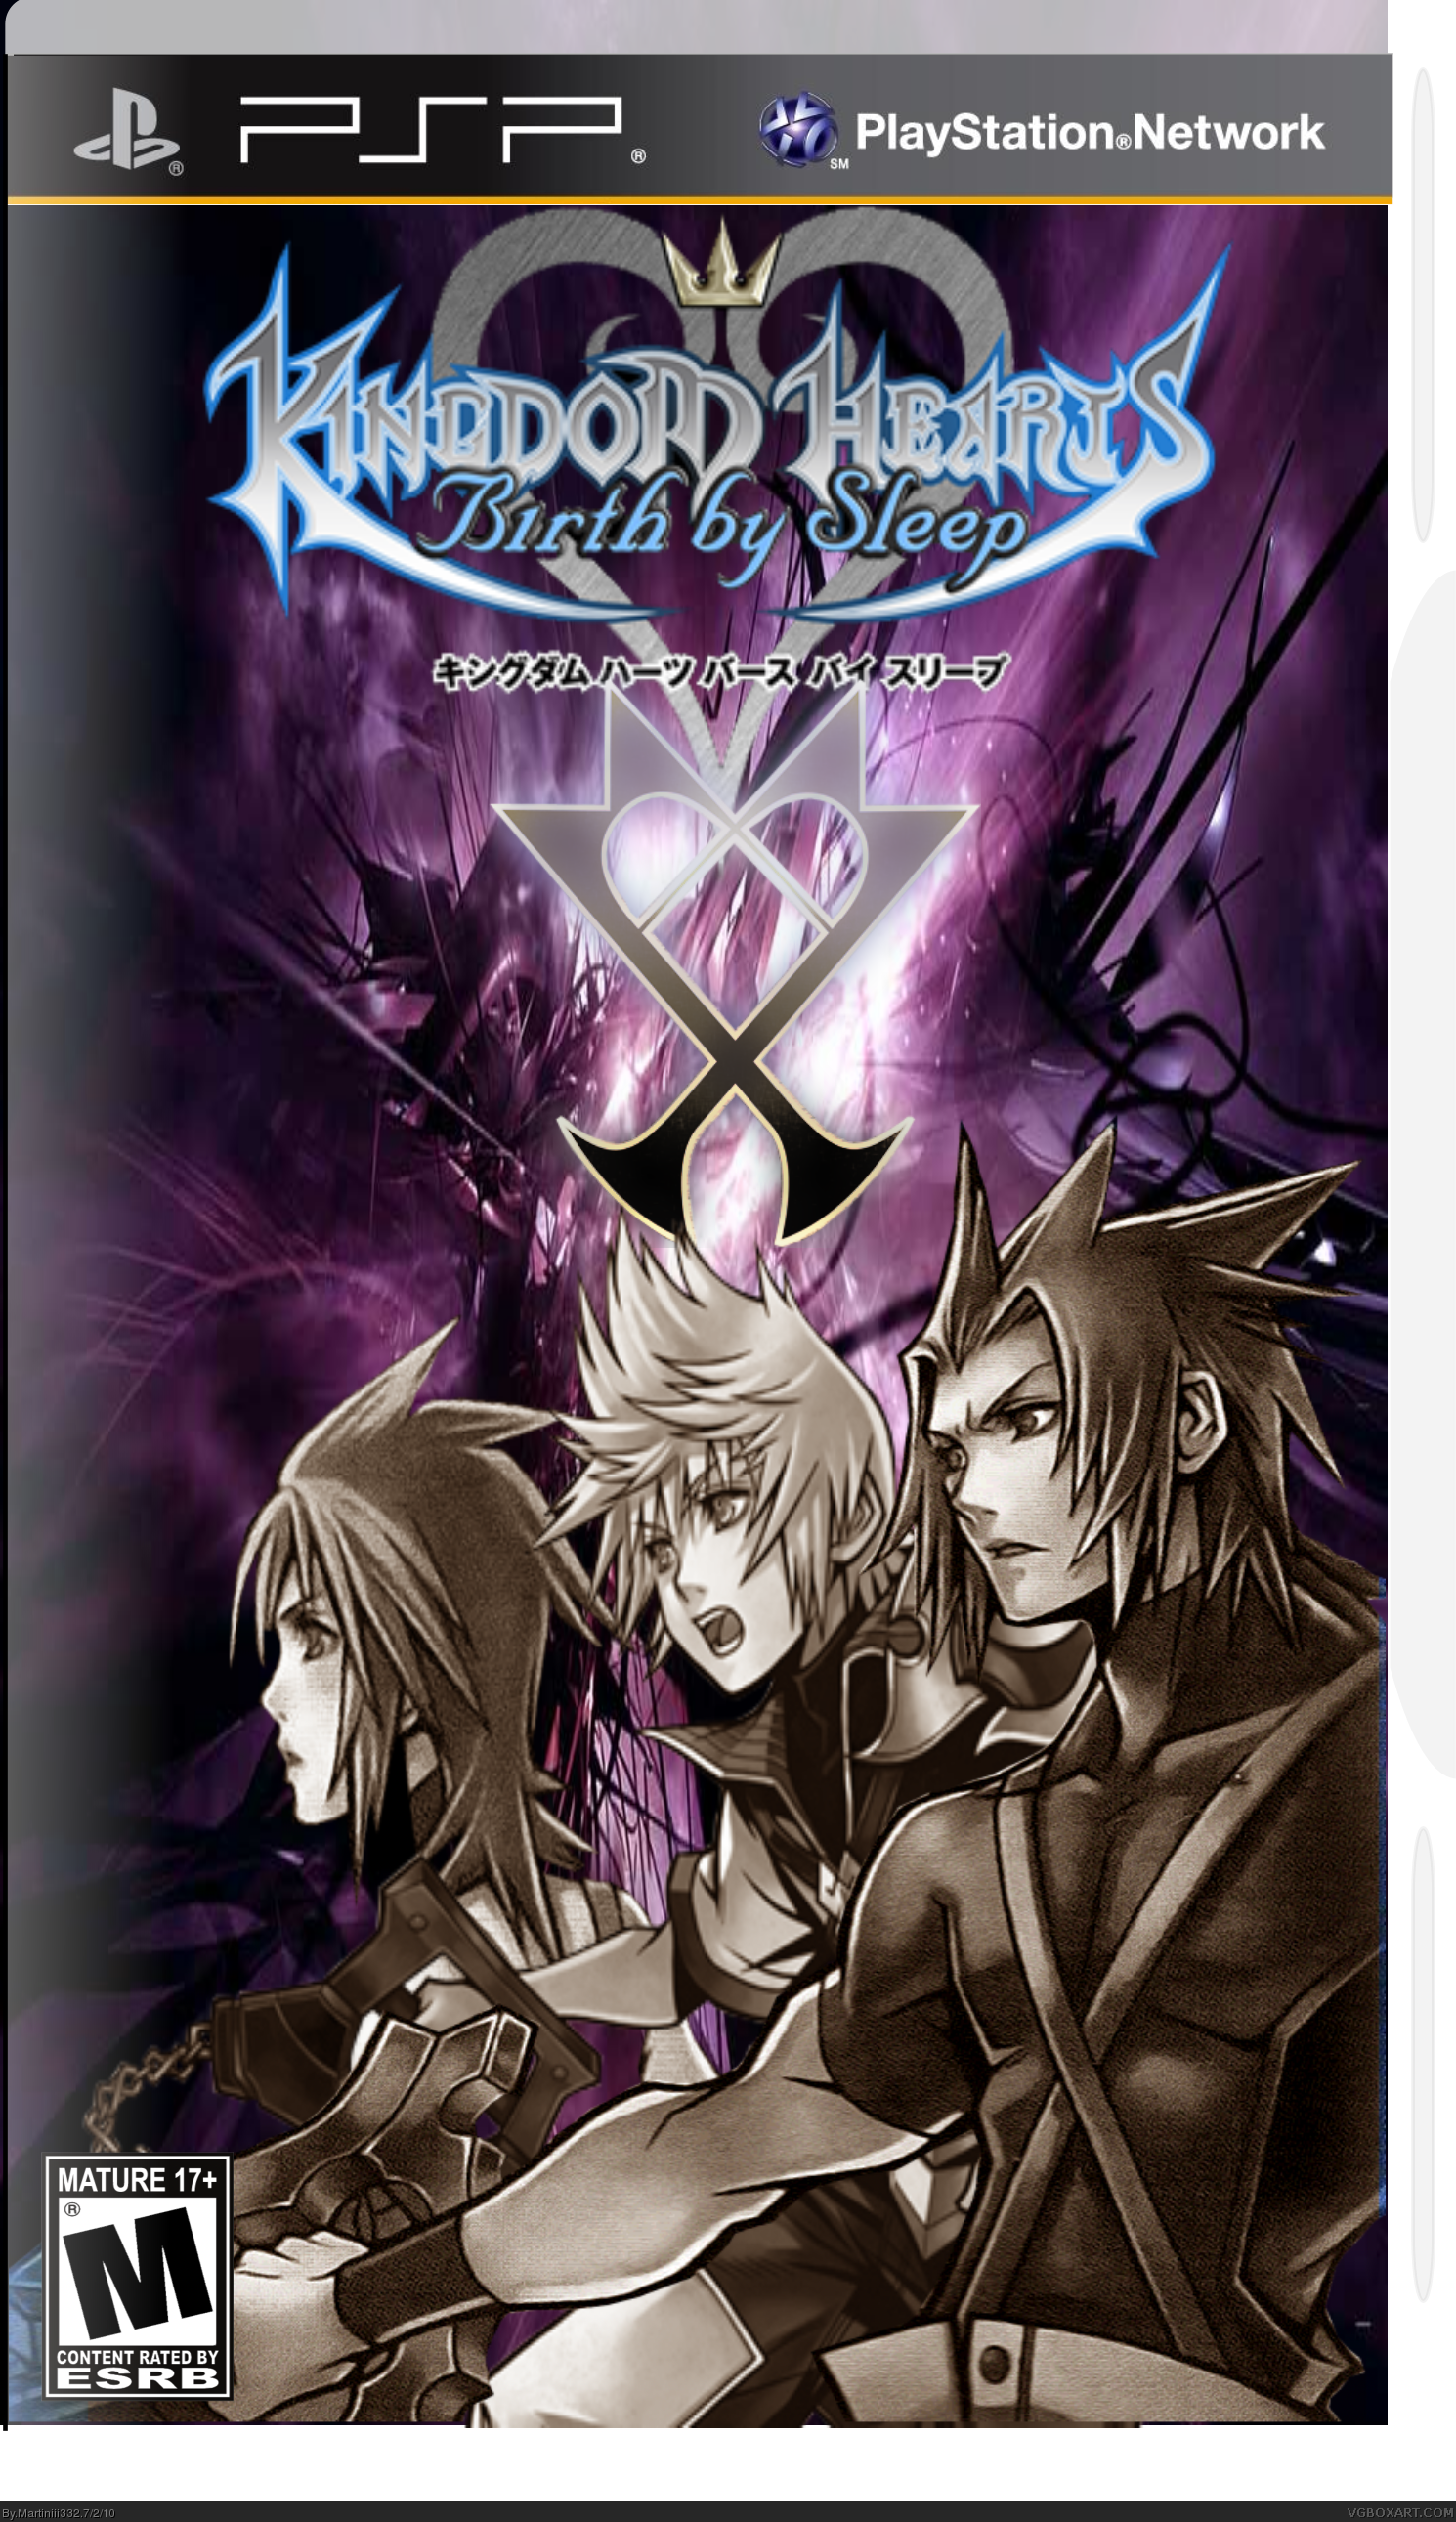 Buy Kingdom Hearts: Birth by Sleep for PSP